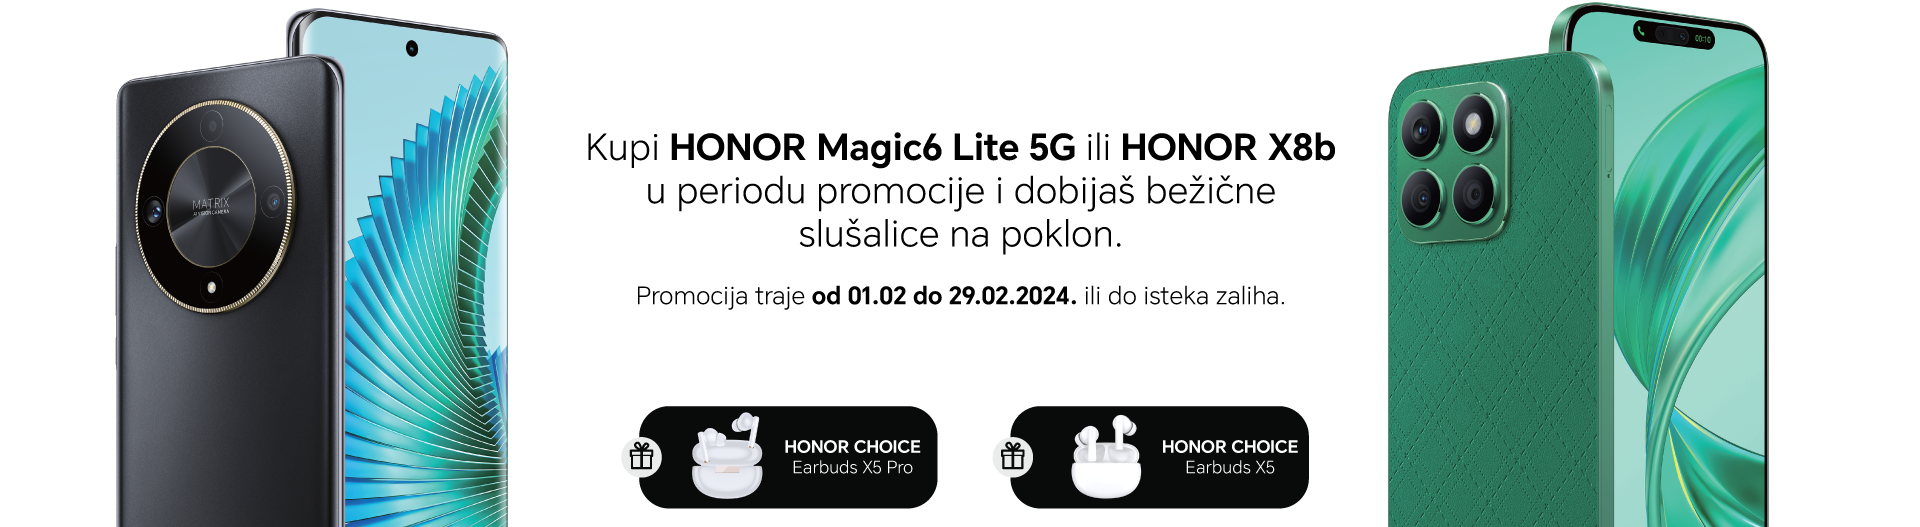 Honor Magic6 Lite 5G/ Honor X8b                                                                                                                                                                                                                                